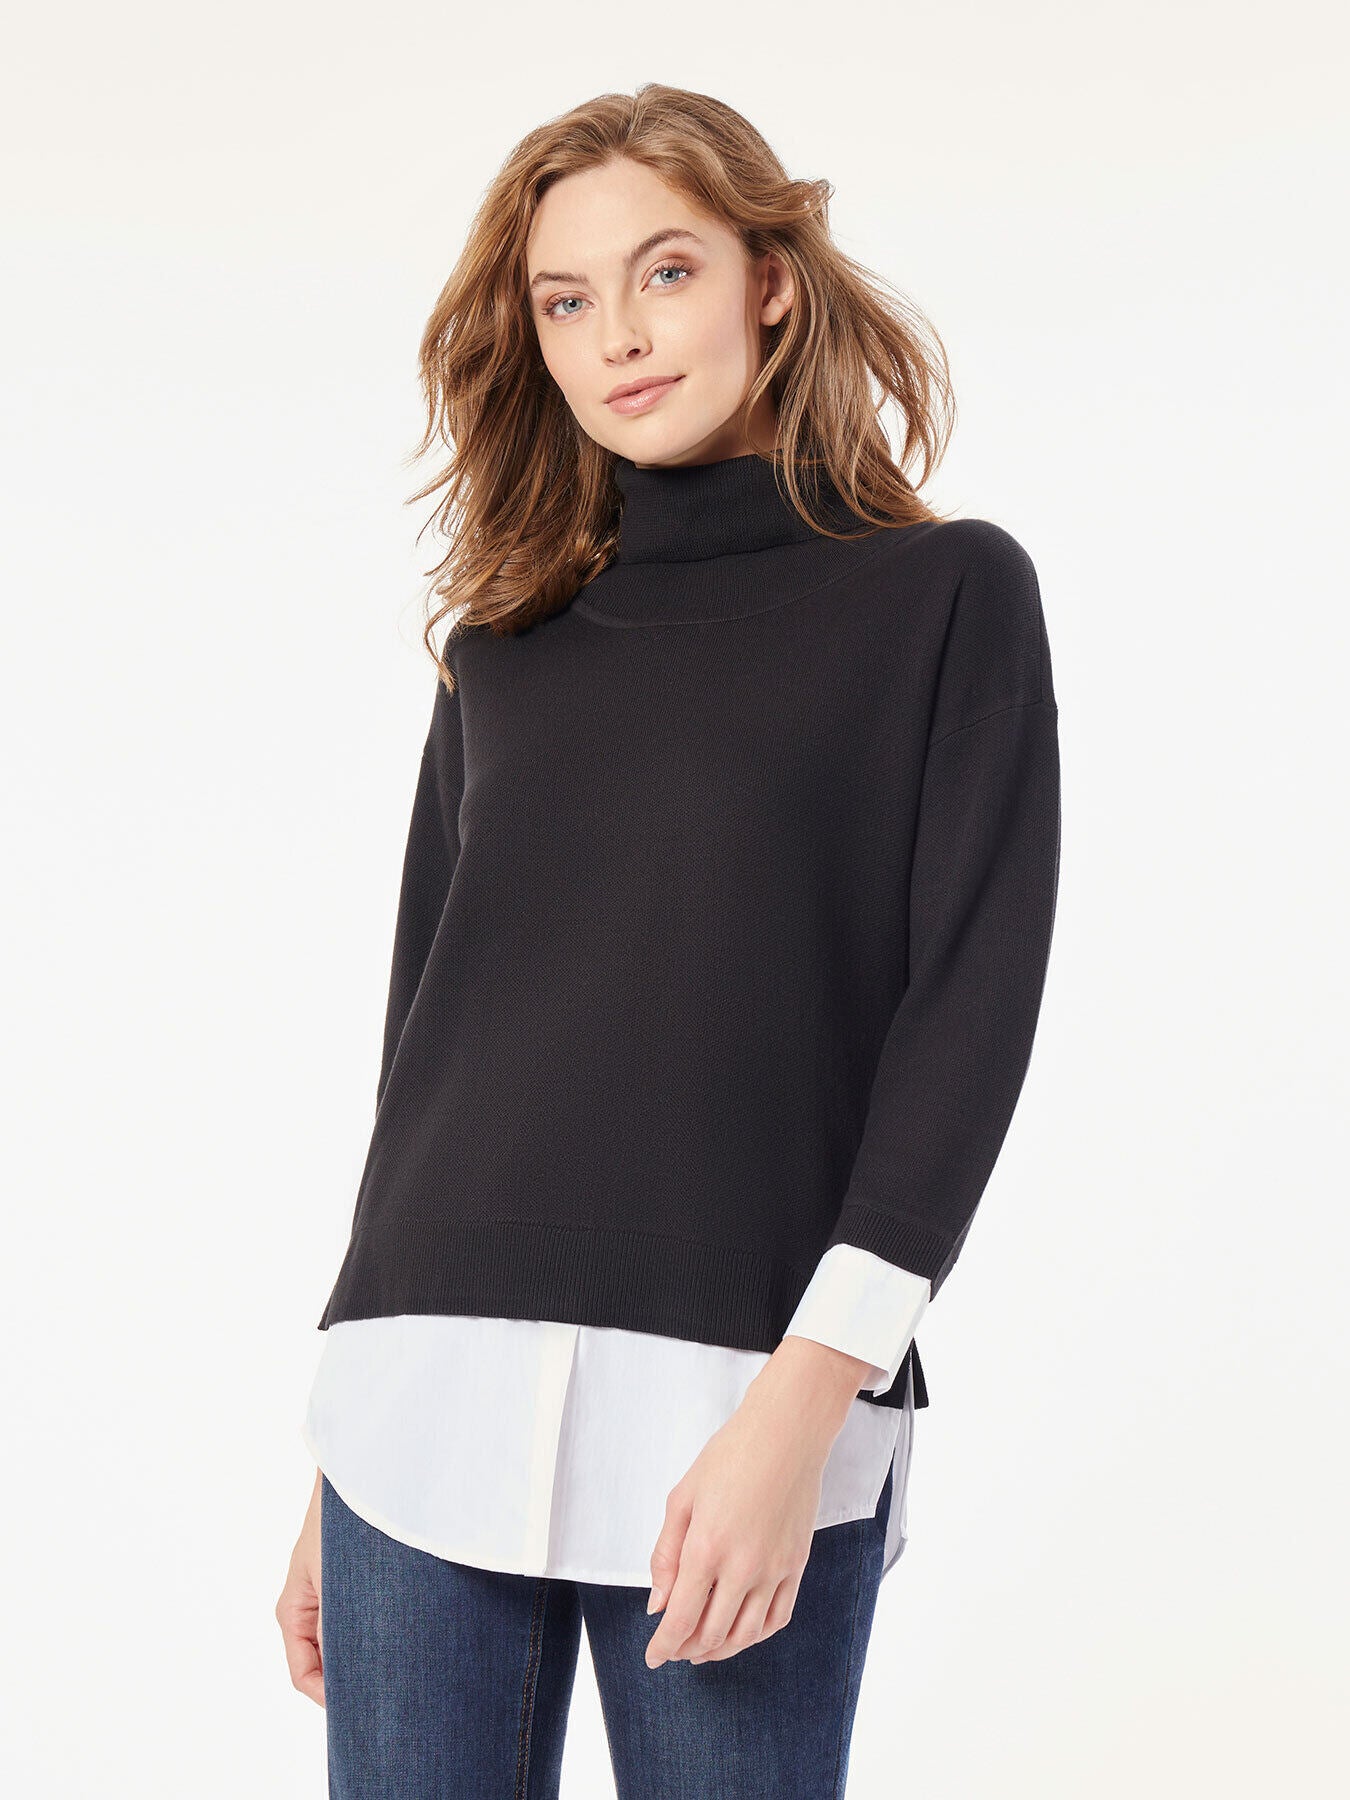 Turtleneck Sweater Woven Shirt Combo Top